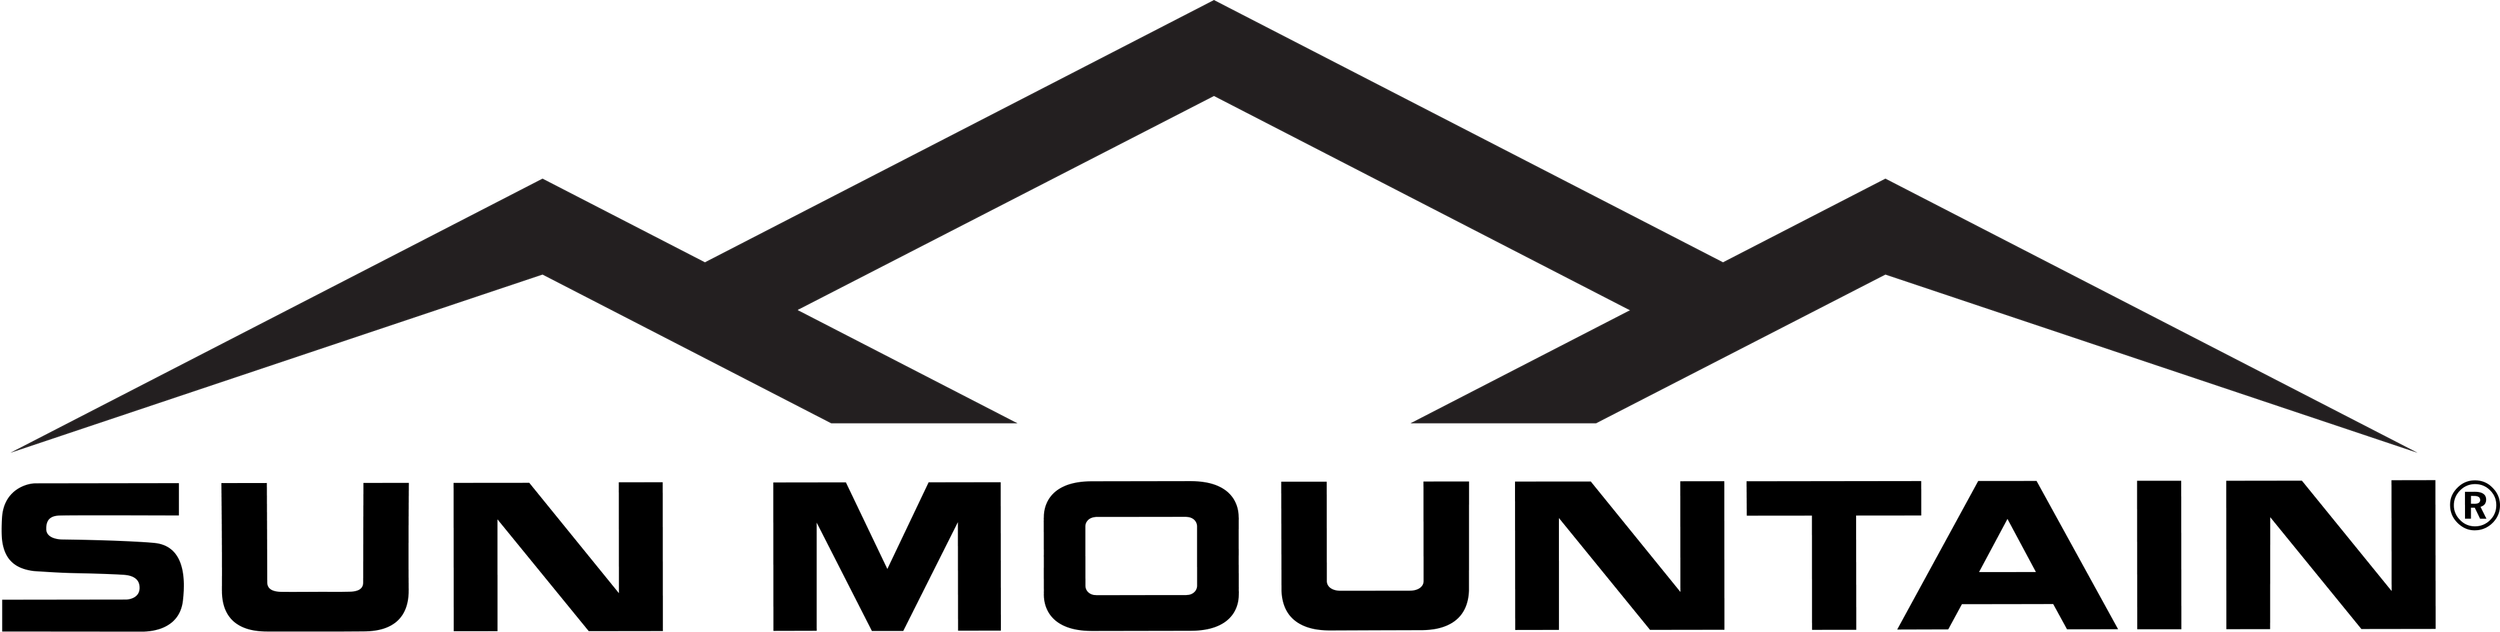 sun mountain logo 2023.png